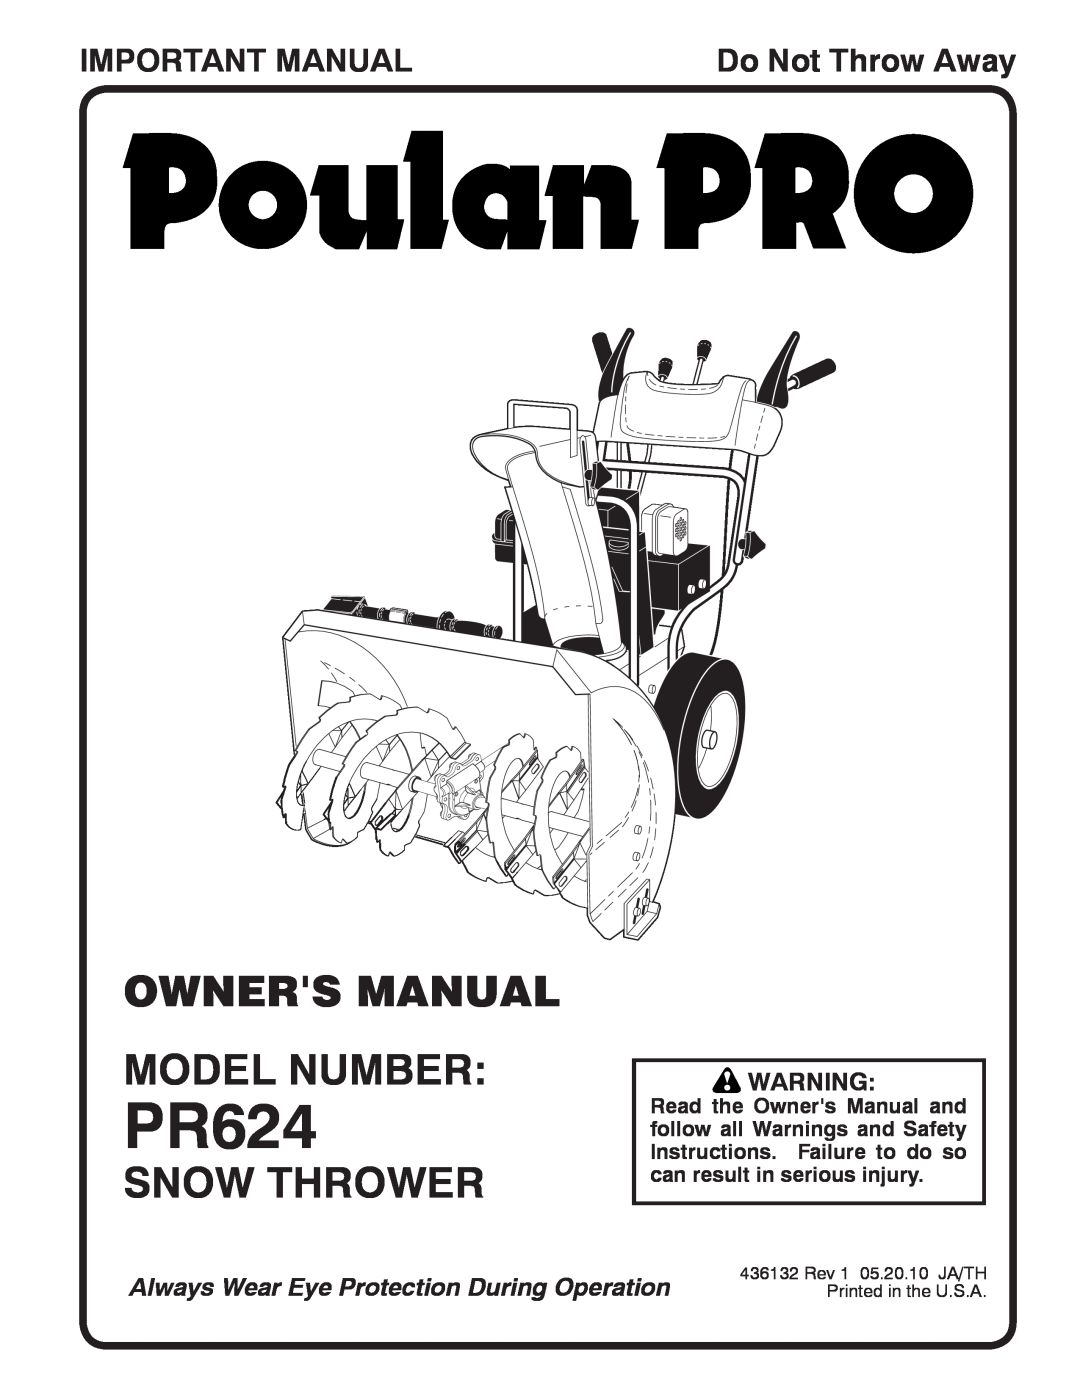 Poulan 96192004200, 436132 owner manual Snow Thrower, Important Manual, PR624, Do Not Throw Away 